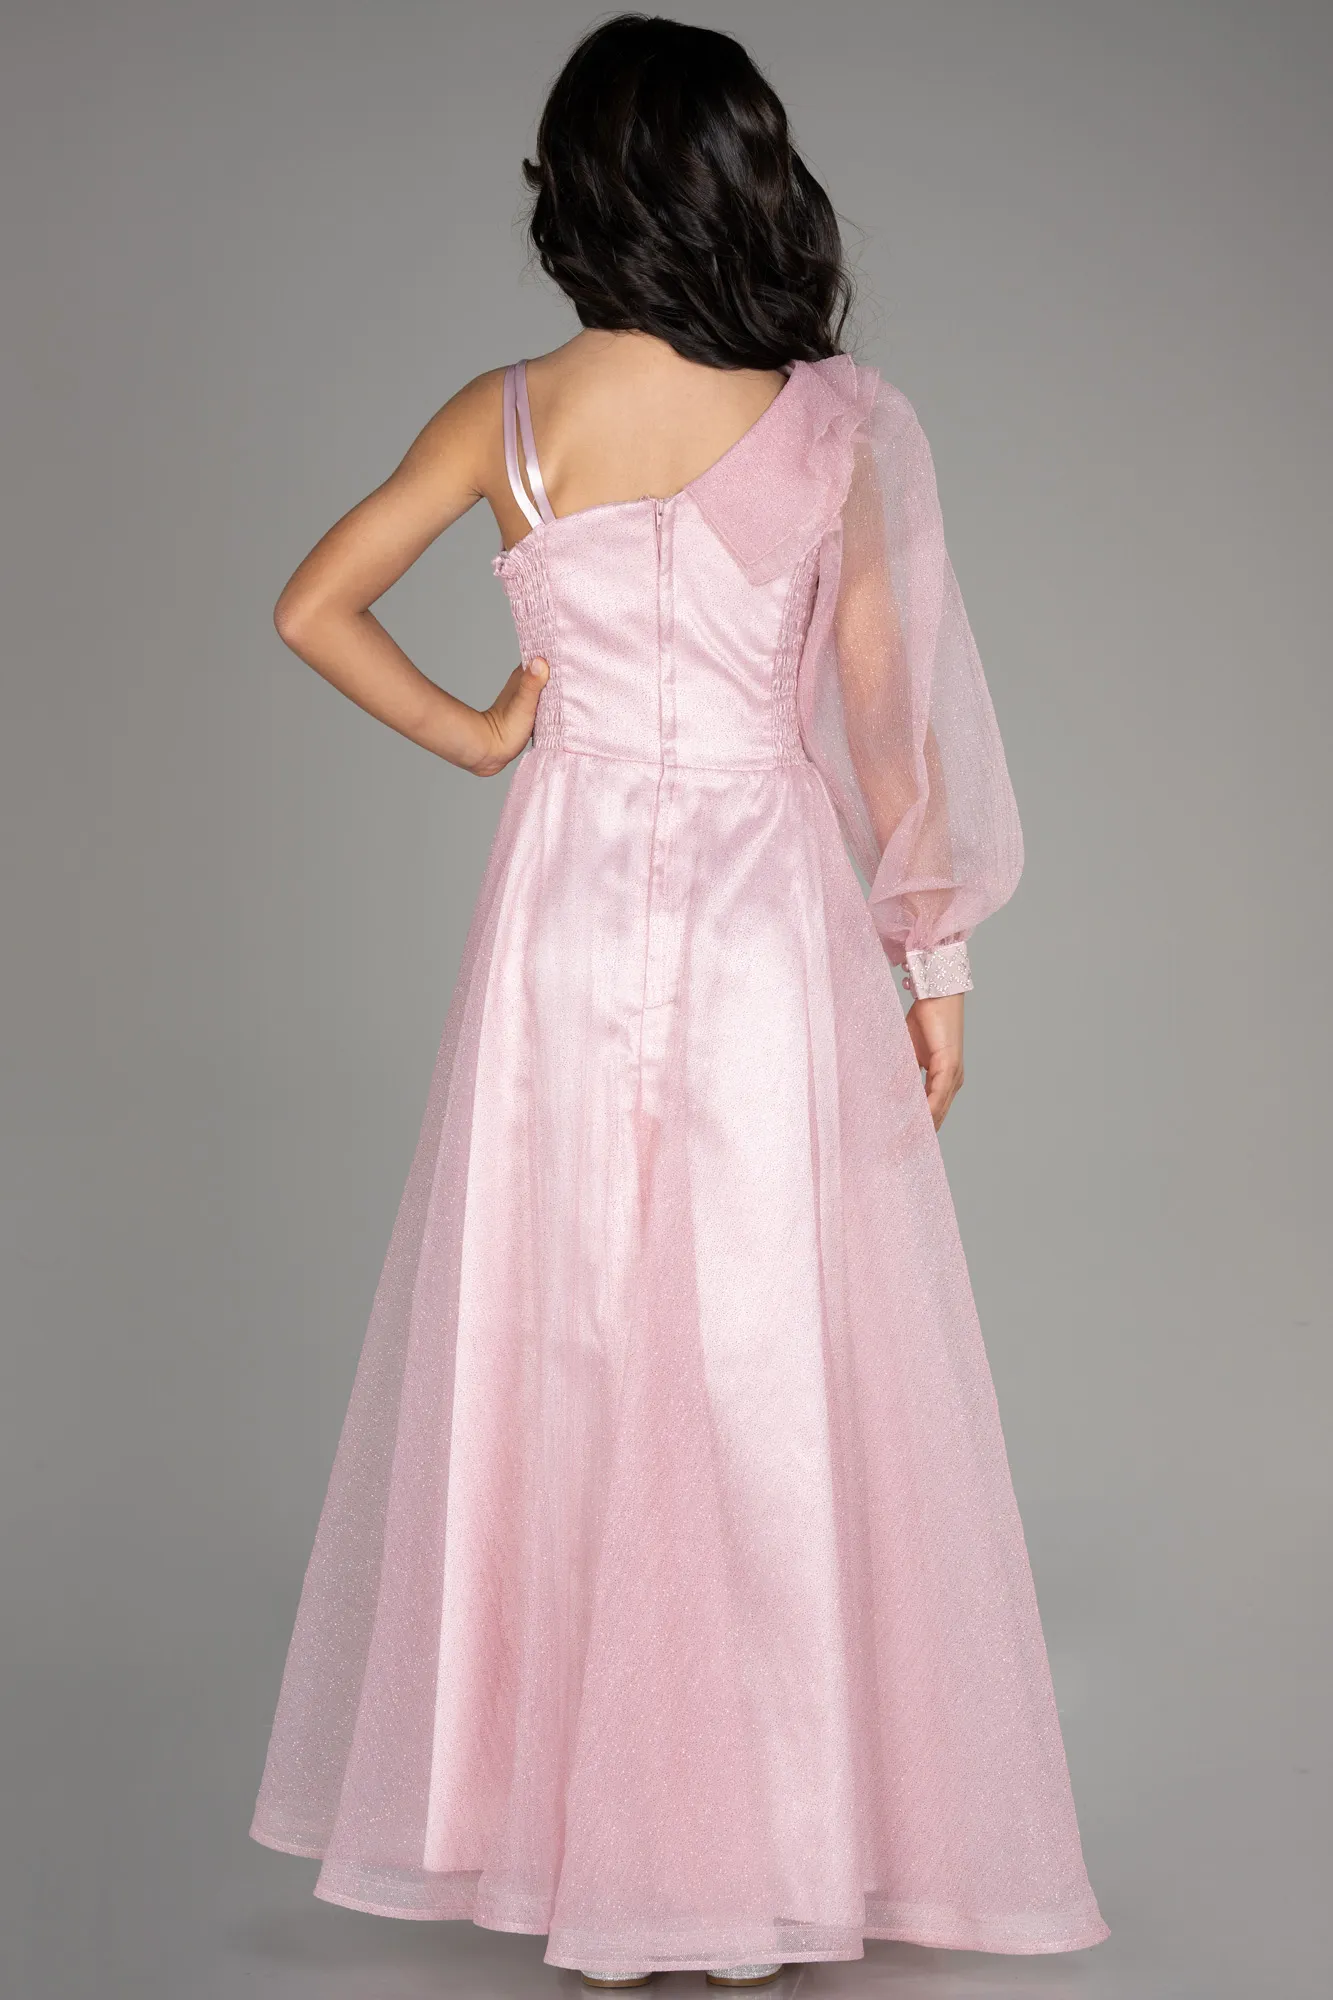 Powder Color-Long Girl Dress ABU2453